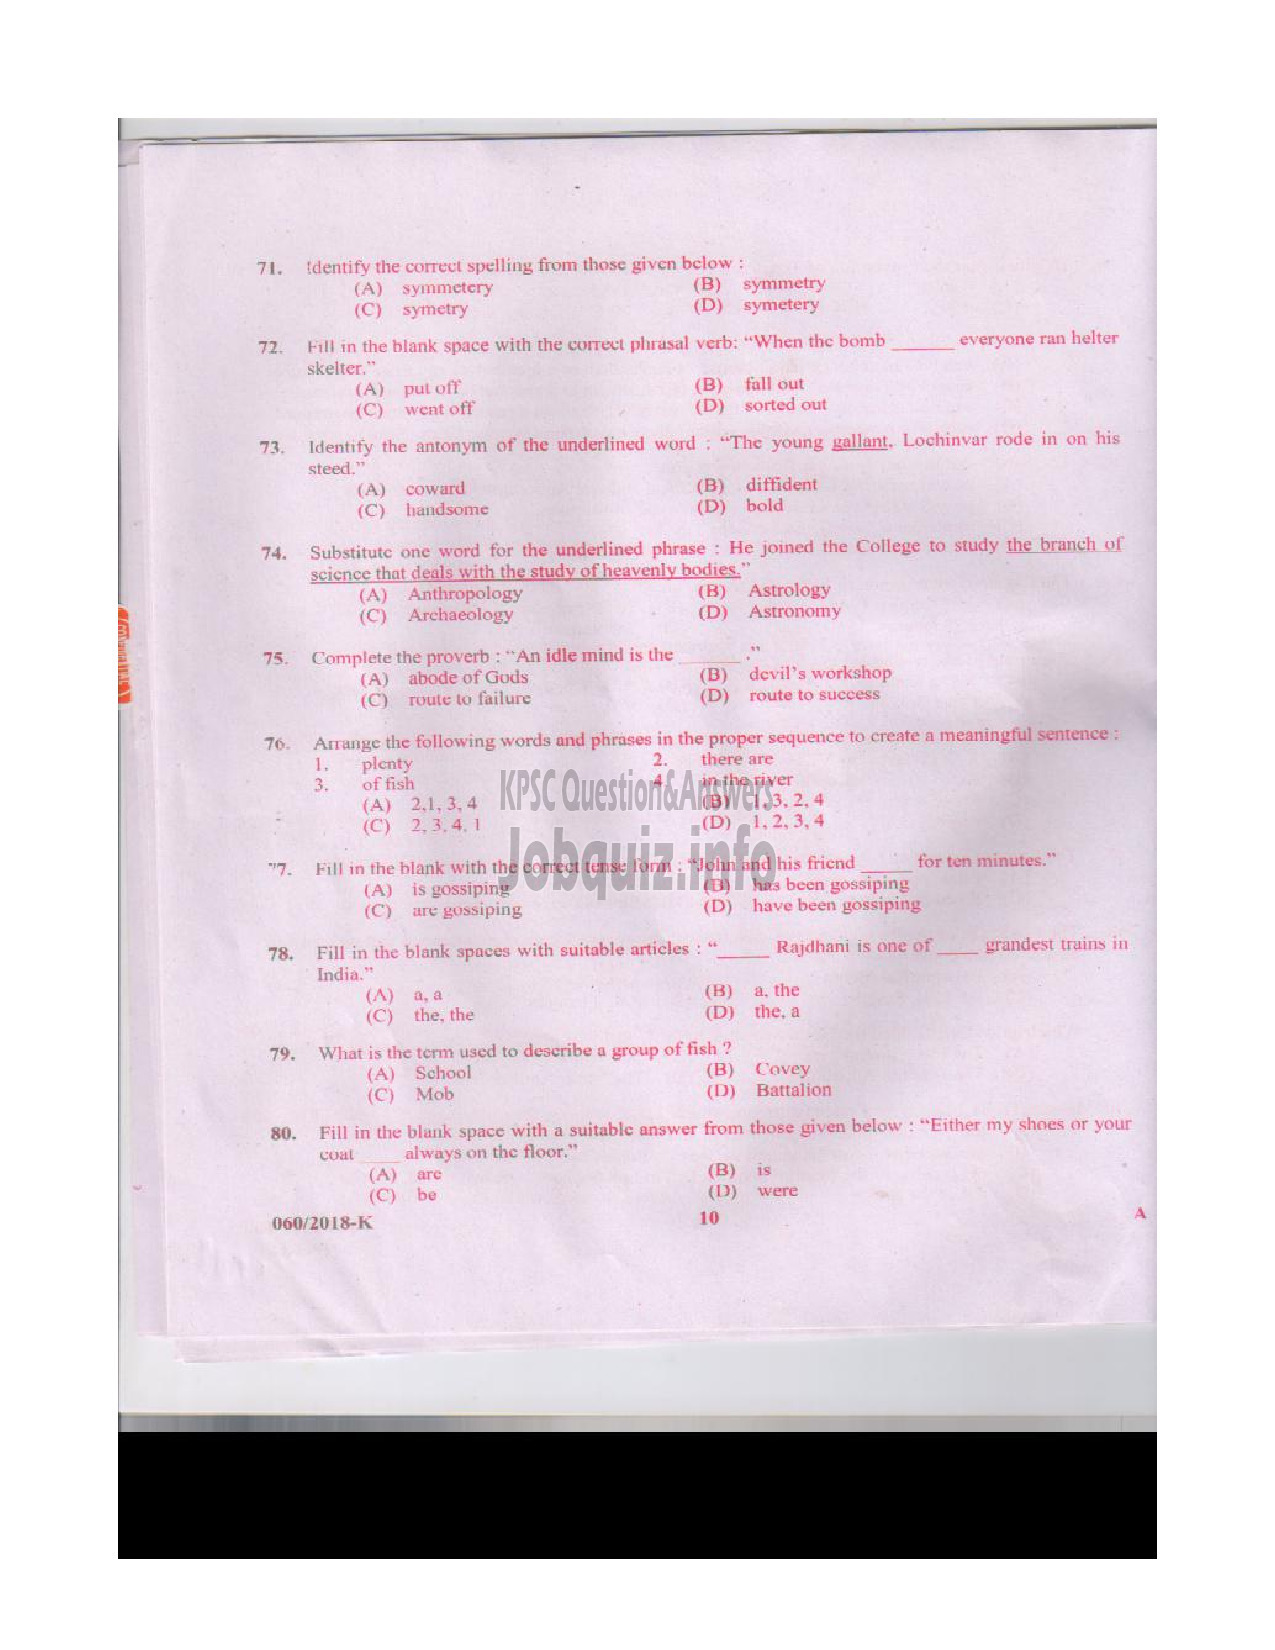 Kerala PSC Question Paper - JUNIOR ASSISTANT / CASHIER / ASSISTANT GRADE II / CLERK GR I KSFE LTD / KSEB LTD / KSRTC / FOAM MATTINGS ETC ENGLISH / KANNADA -9